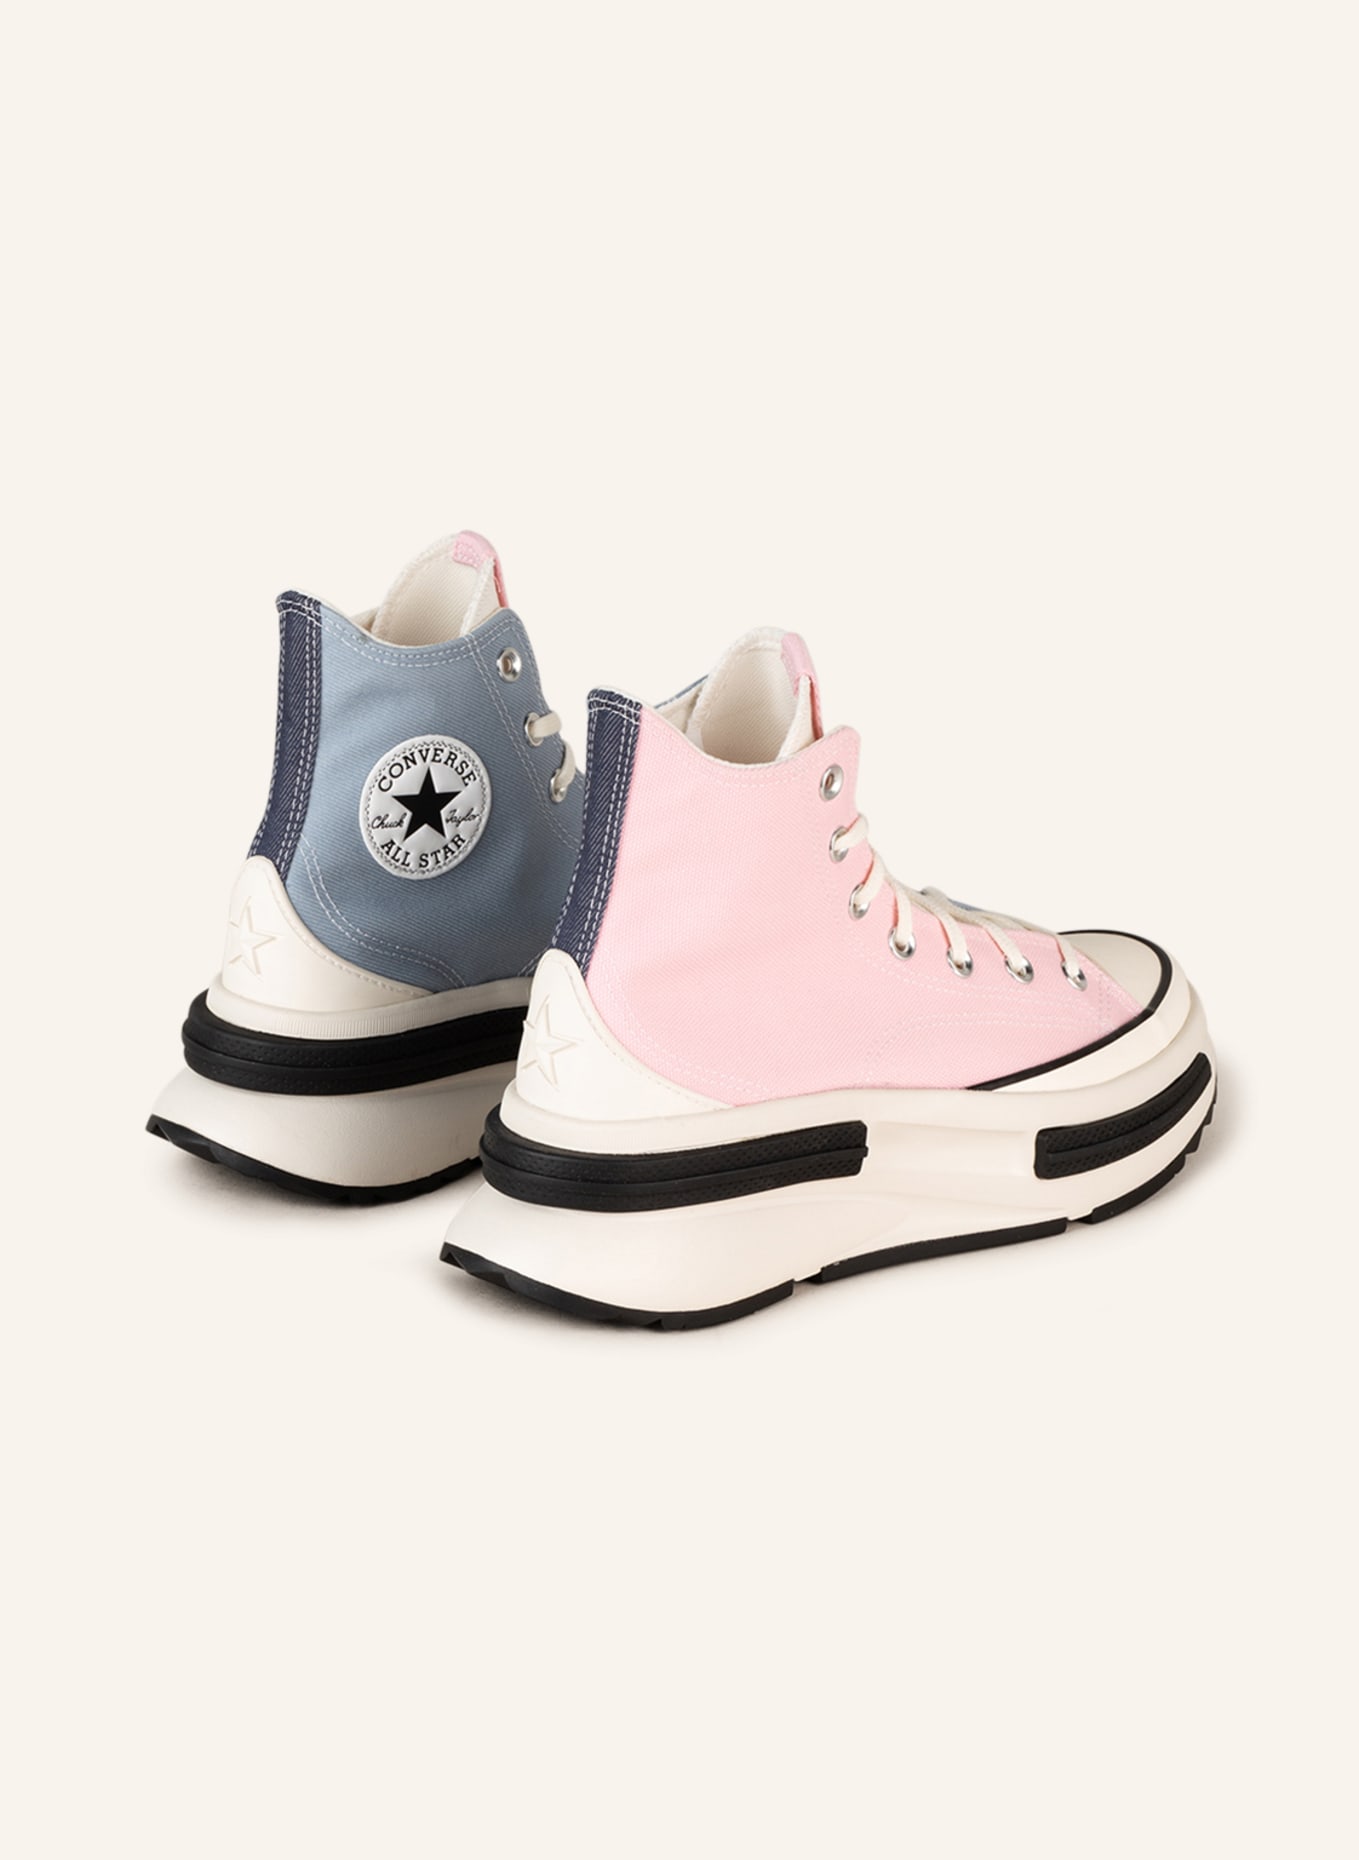 CONVERSE Hightop-Sneaker RUN STAR LEGACY CX, Farbe: BLAUGRAU/ ROSA (Bild 2)